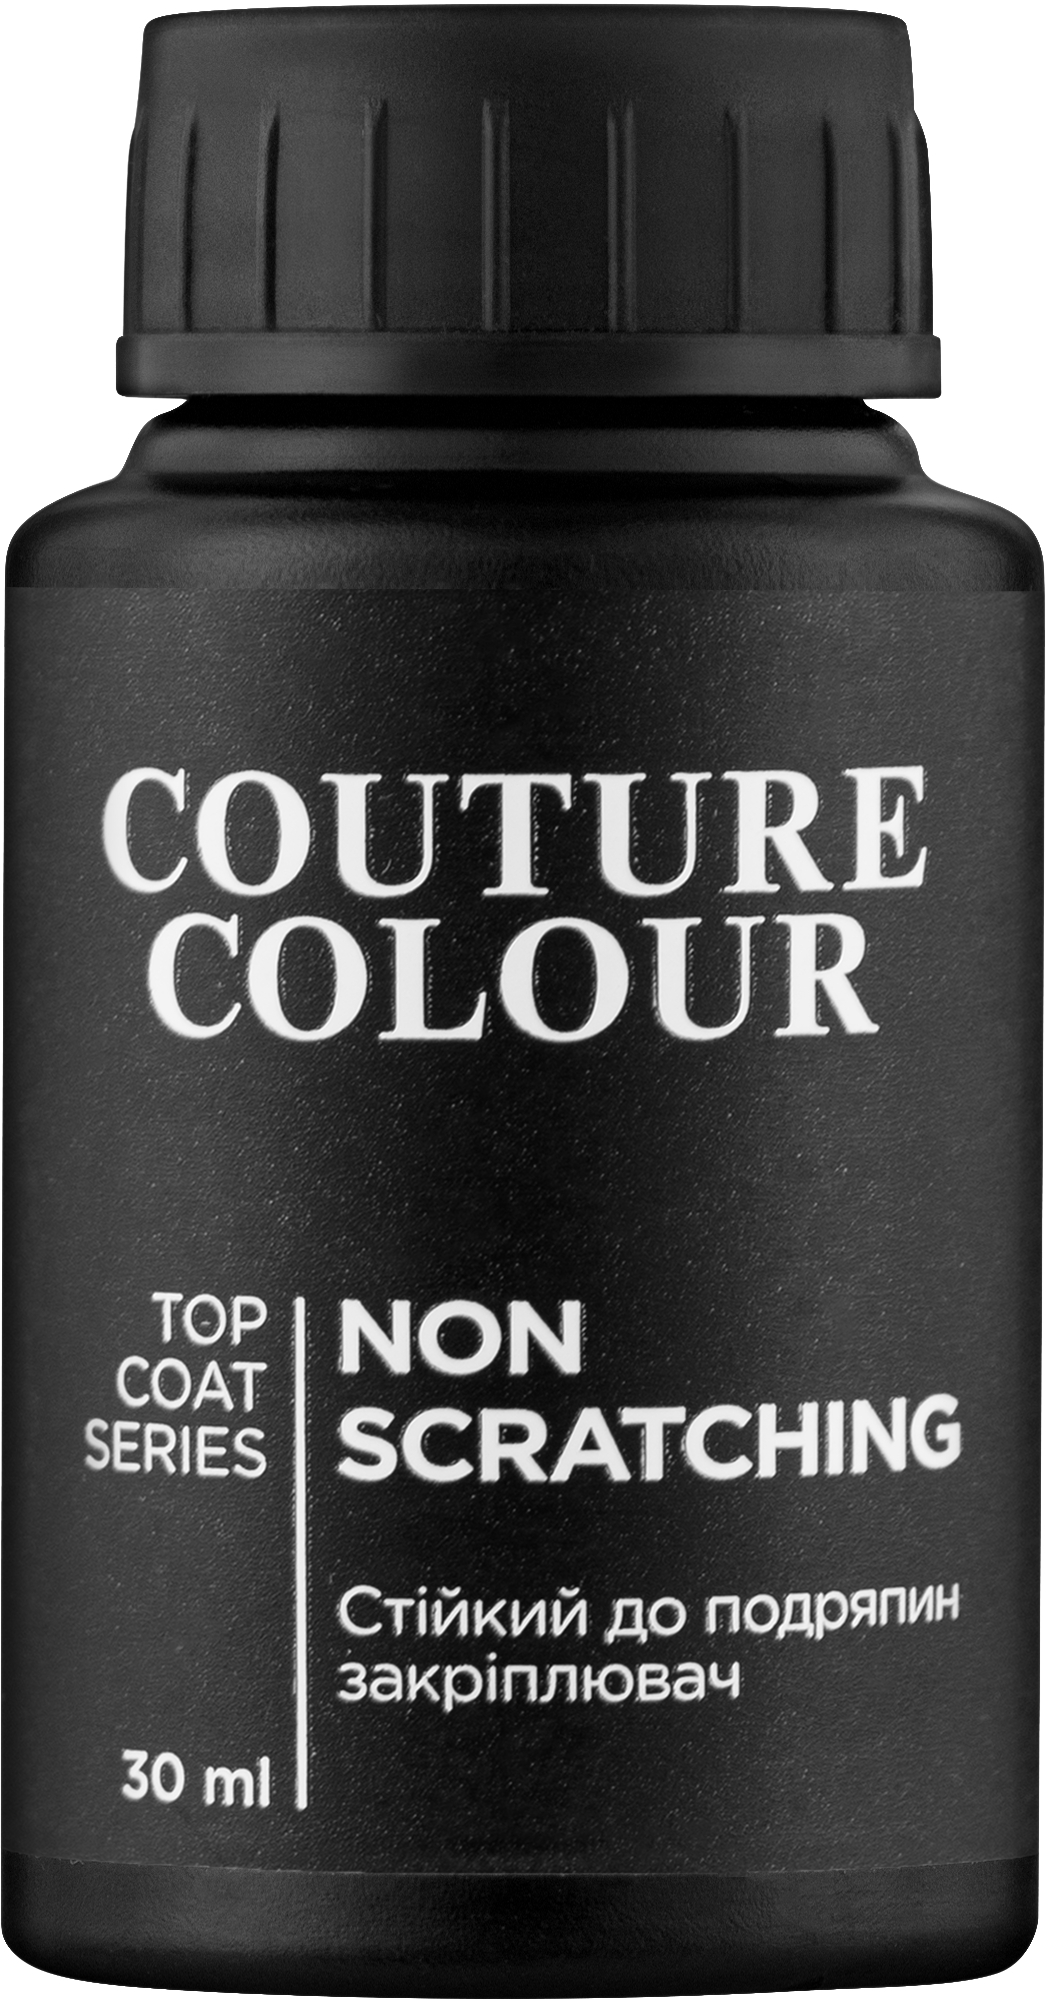 Нецарапающийся топ для гель-лака - Couture Colour Non Scratching Recovering Top Coat — фото 30ml